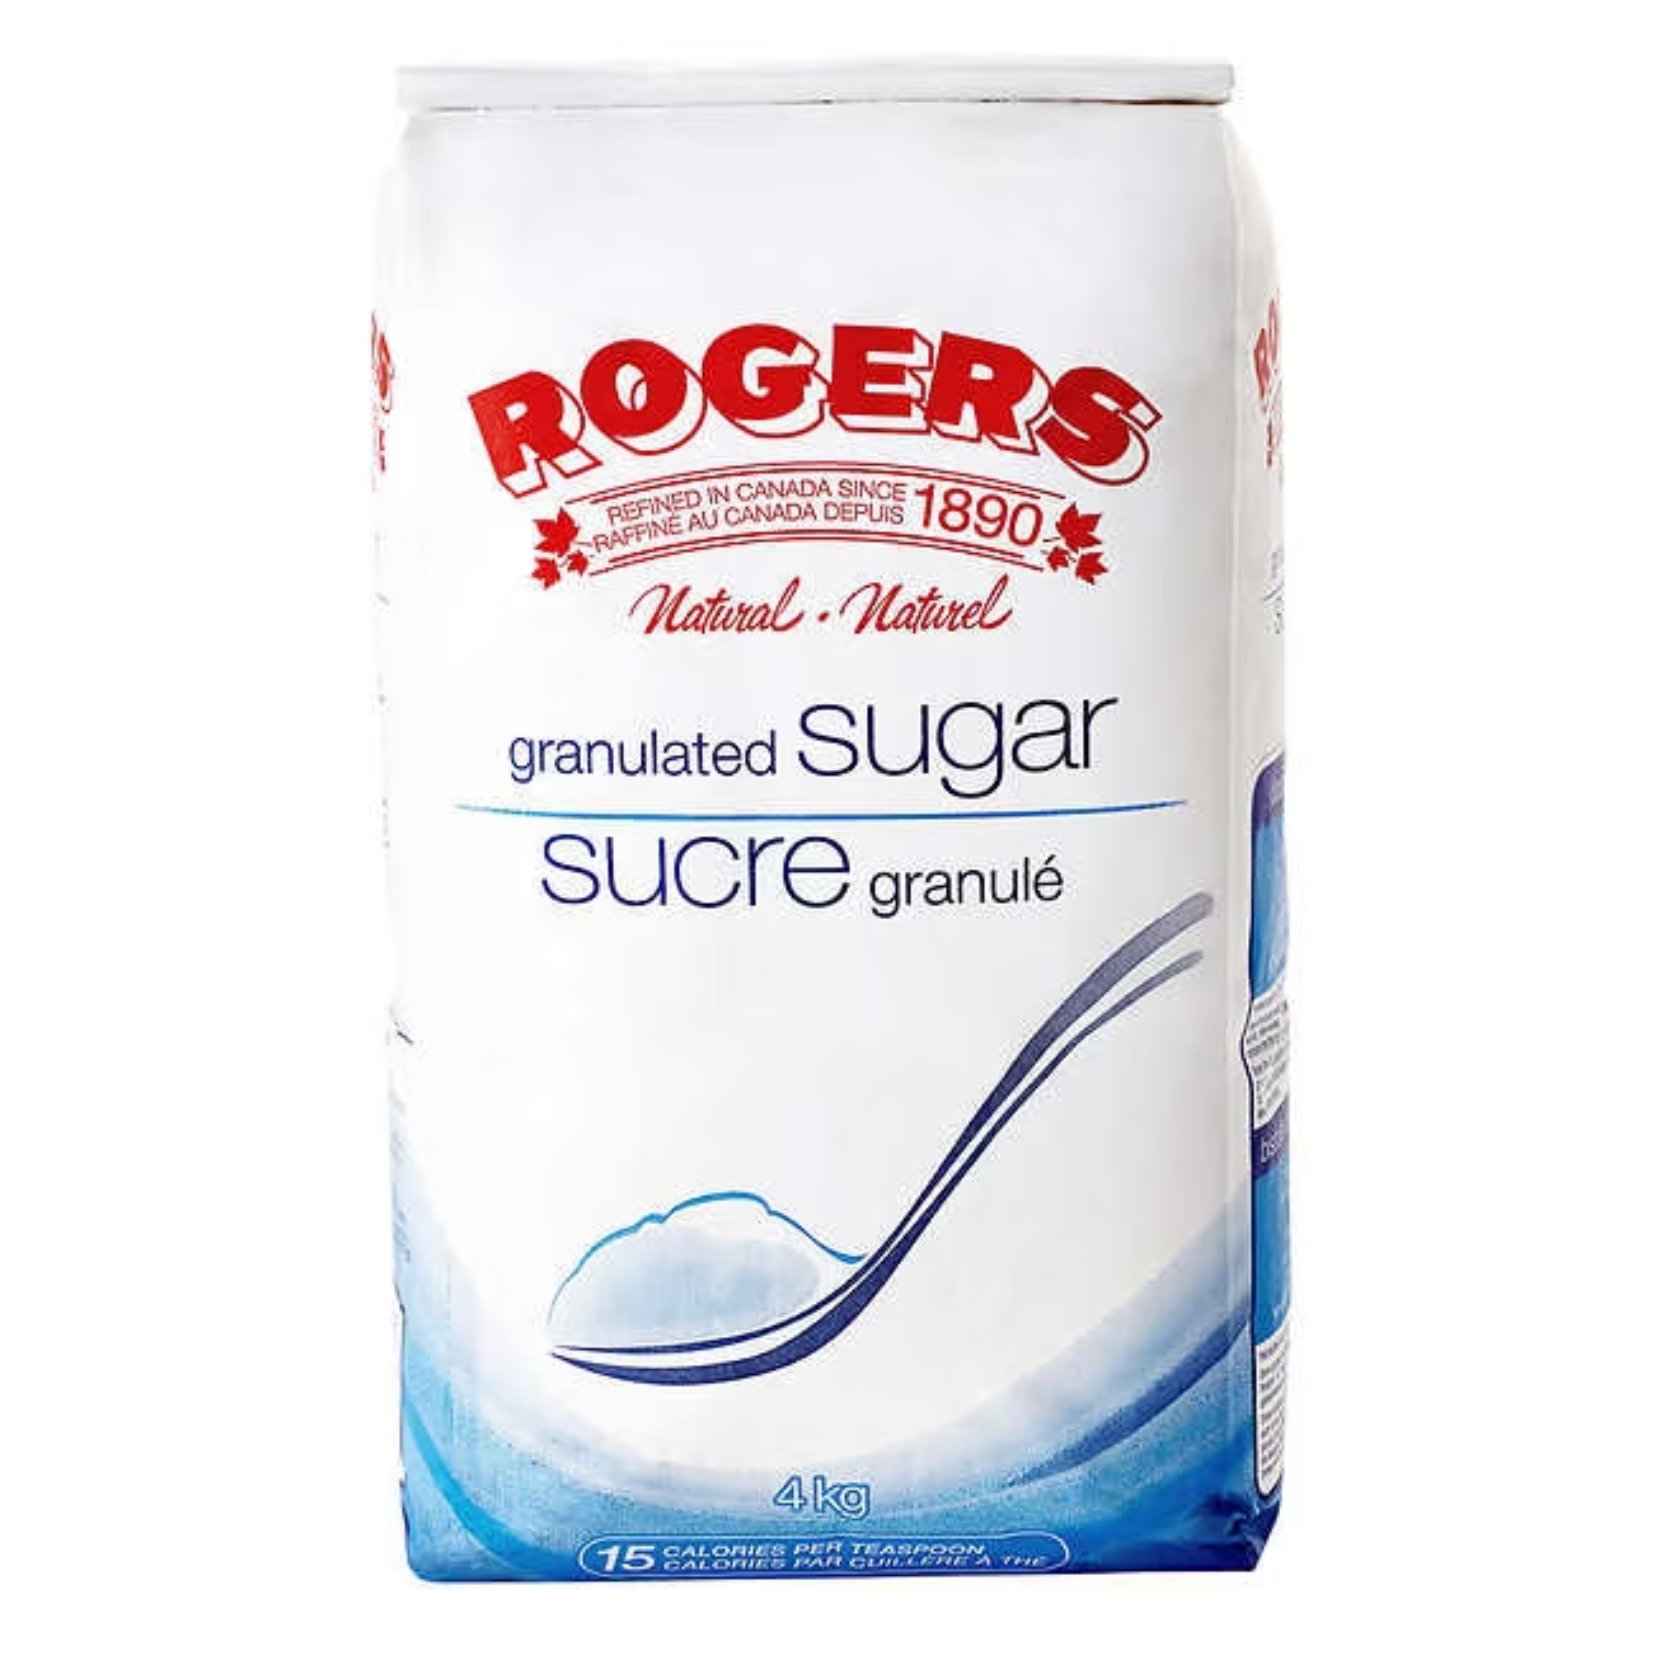 Rogers Granulated Sugar 4kg